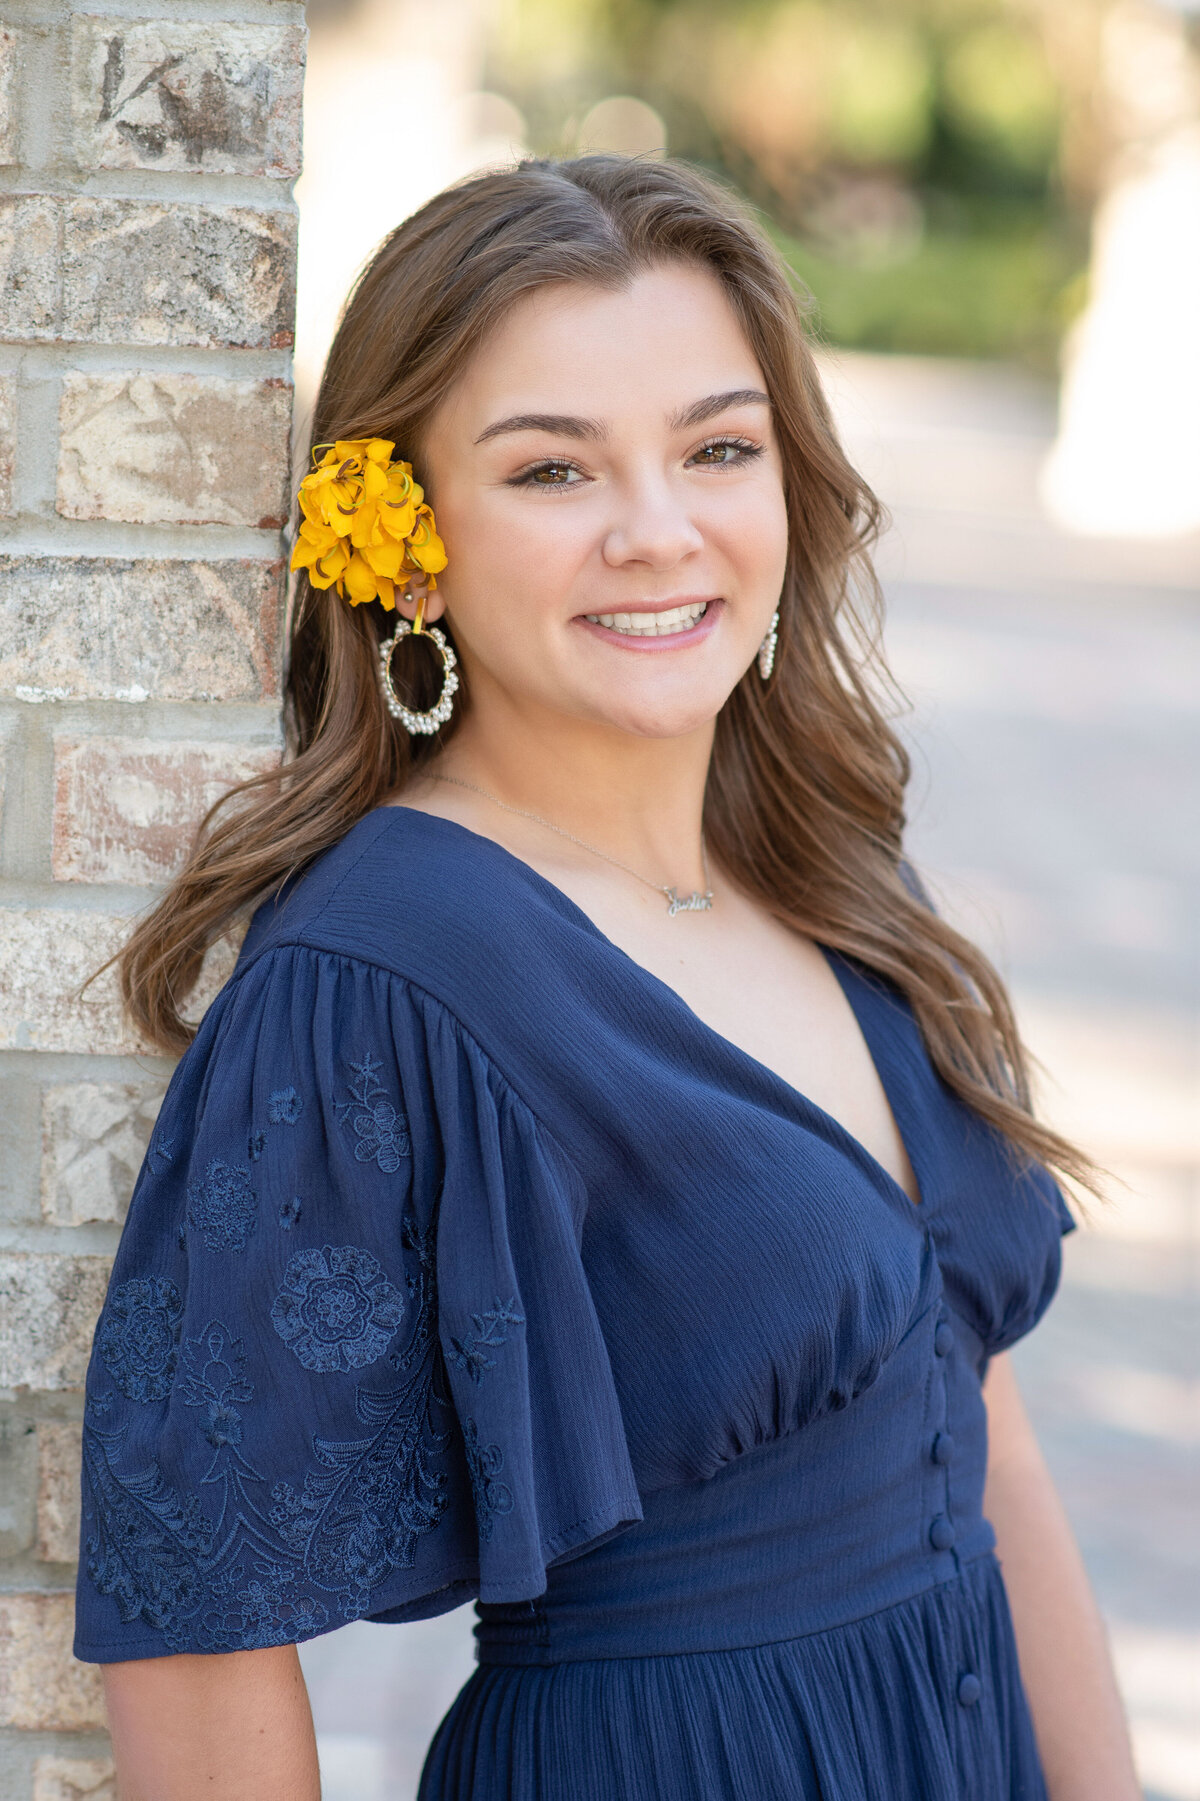 High school senior girl with yellow flowers in hair leans against a brick pillar.